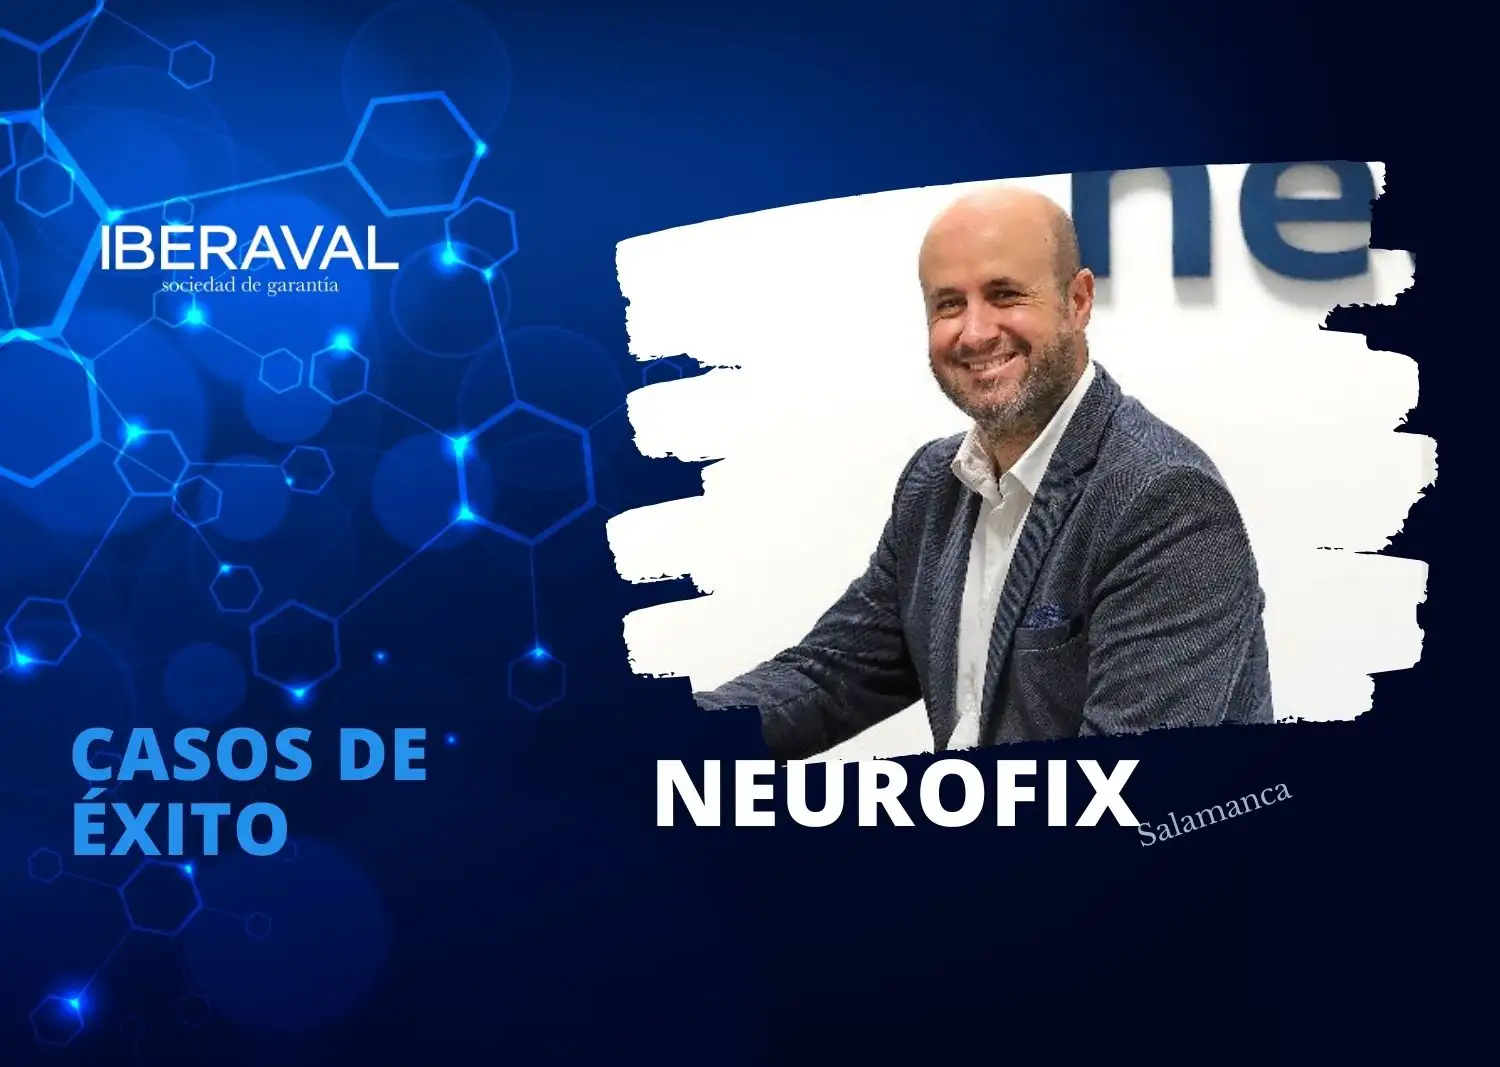 Neurofix - Caso de éxito Iberaval